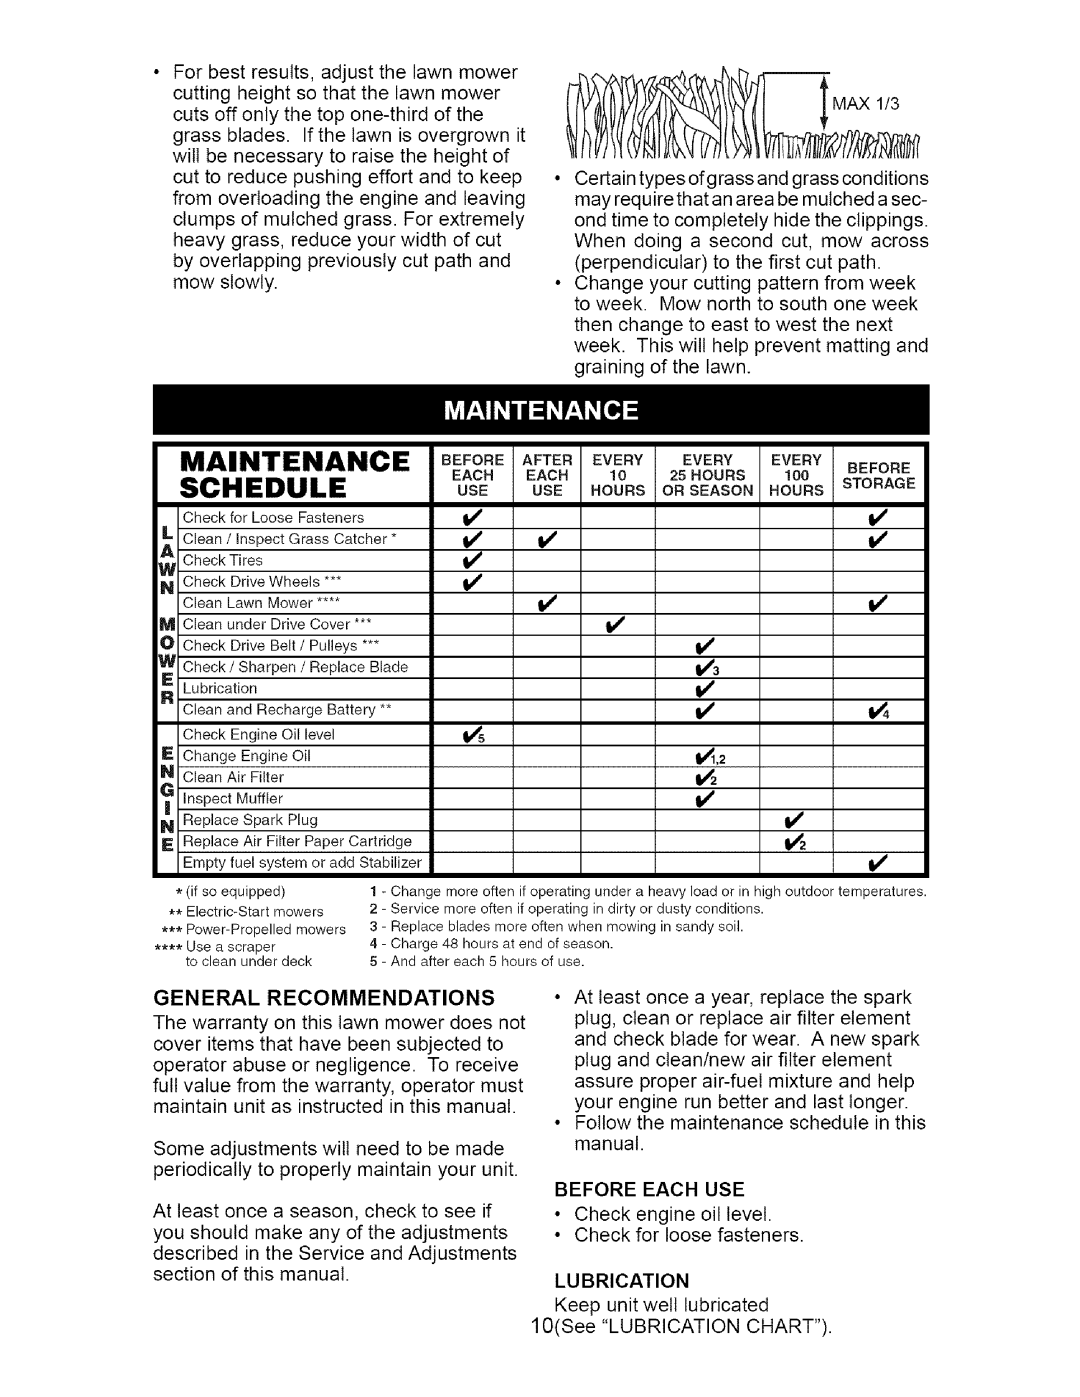 Craftsman 917.385124 owner manual Maintenance, Schedule, Use Hoursorseaso.Hoursstorage, General Recommendations 